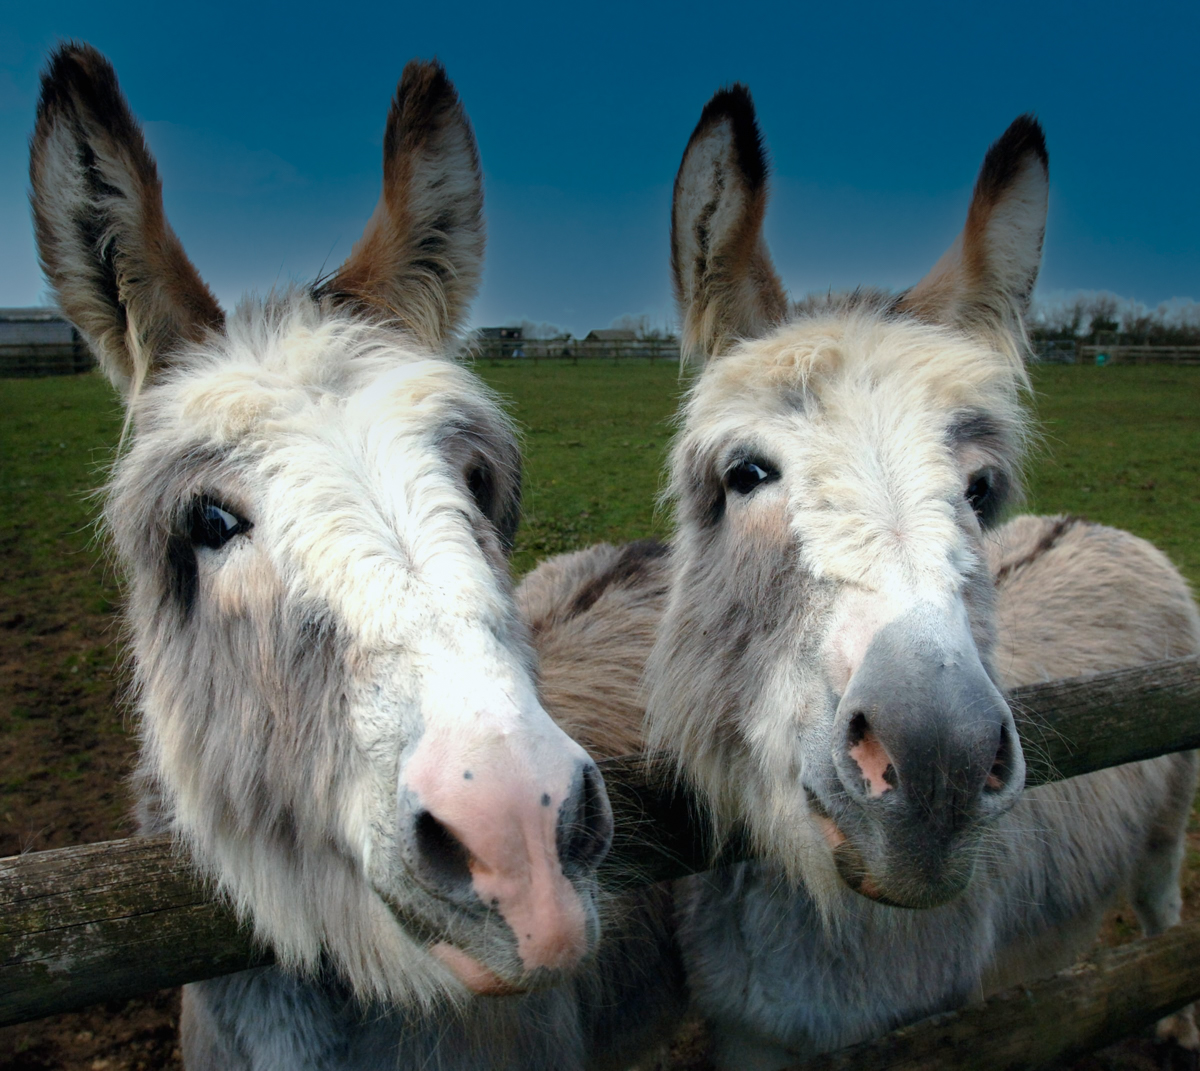 Donkeys and Presidential Humor